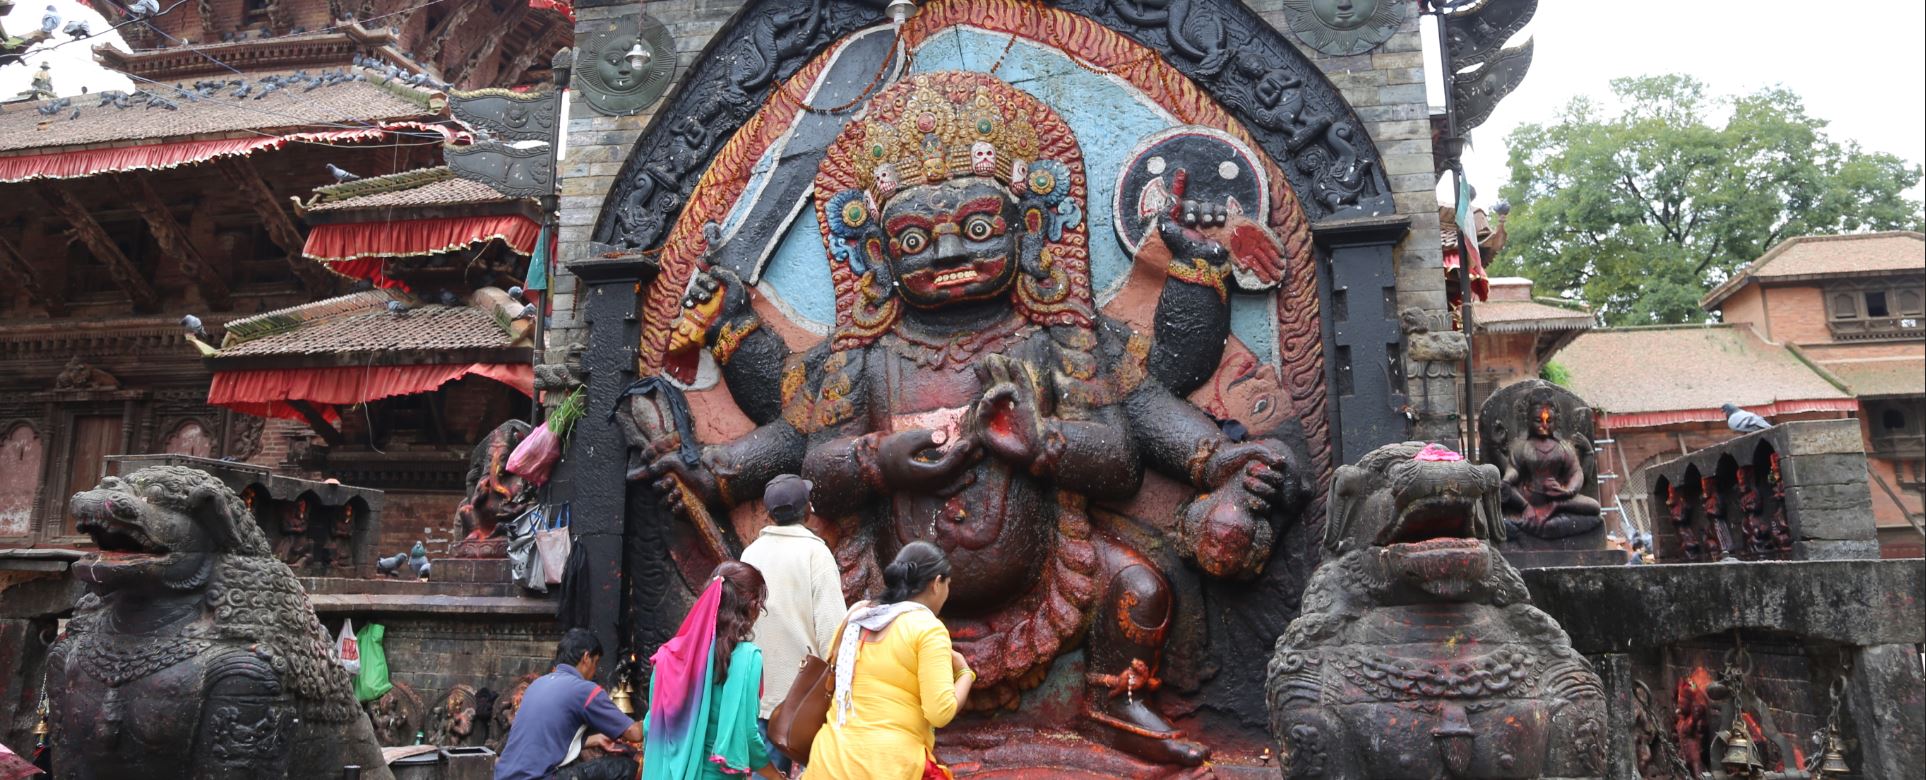 Shiva Bhairava népal